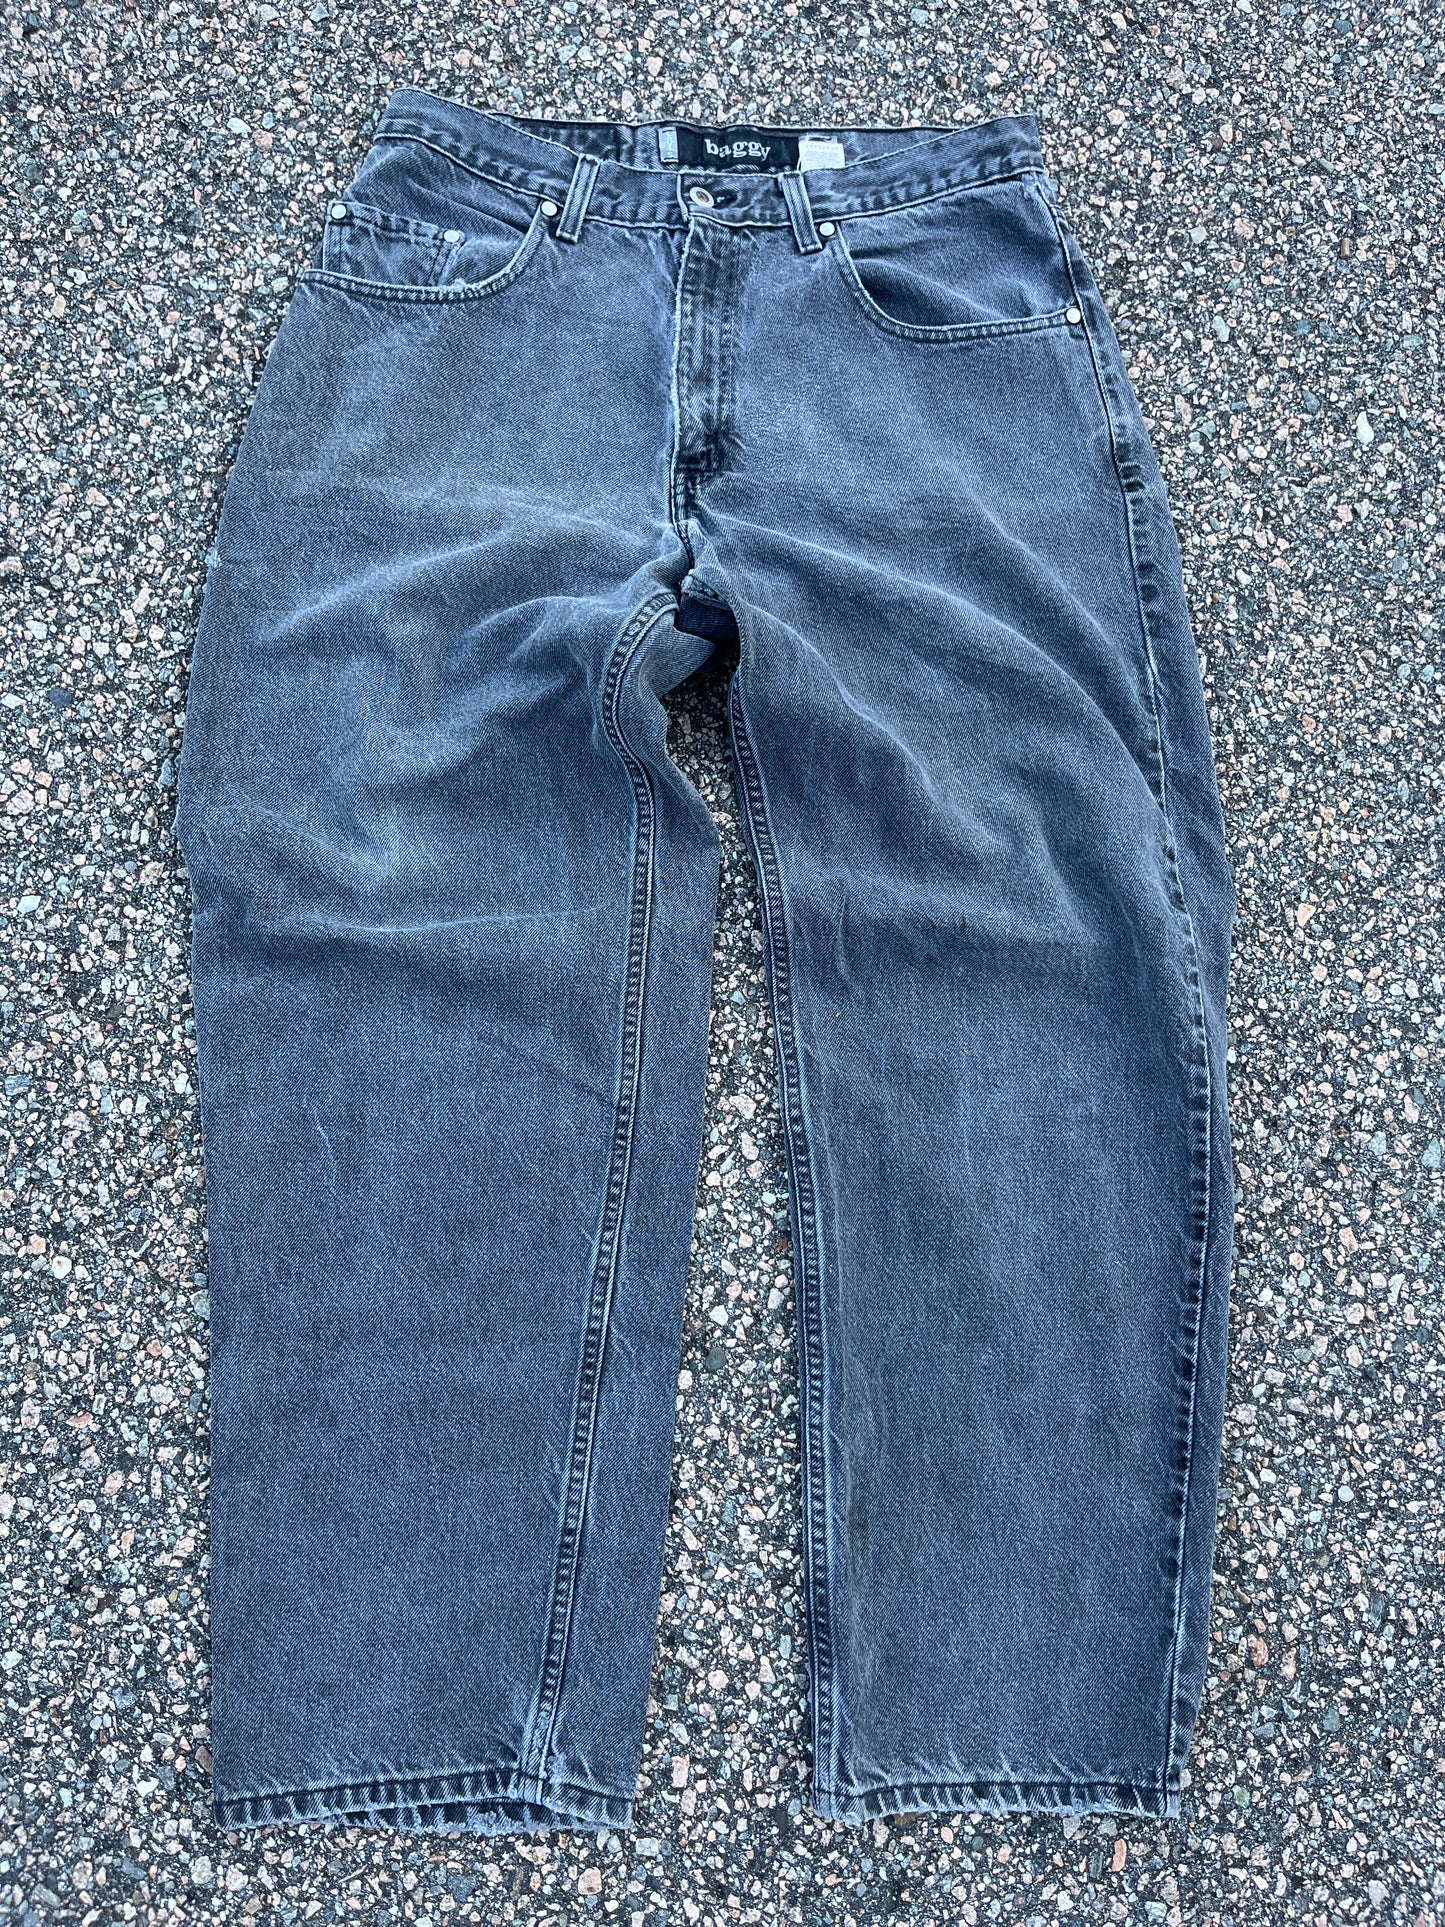 Levi’s 570 Silver Tab Faded Black Pants - 33 x 30.5